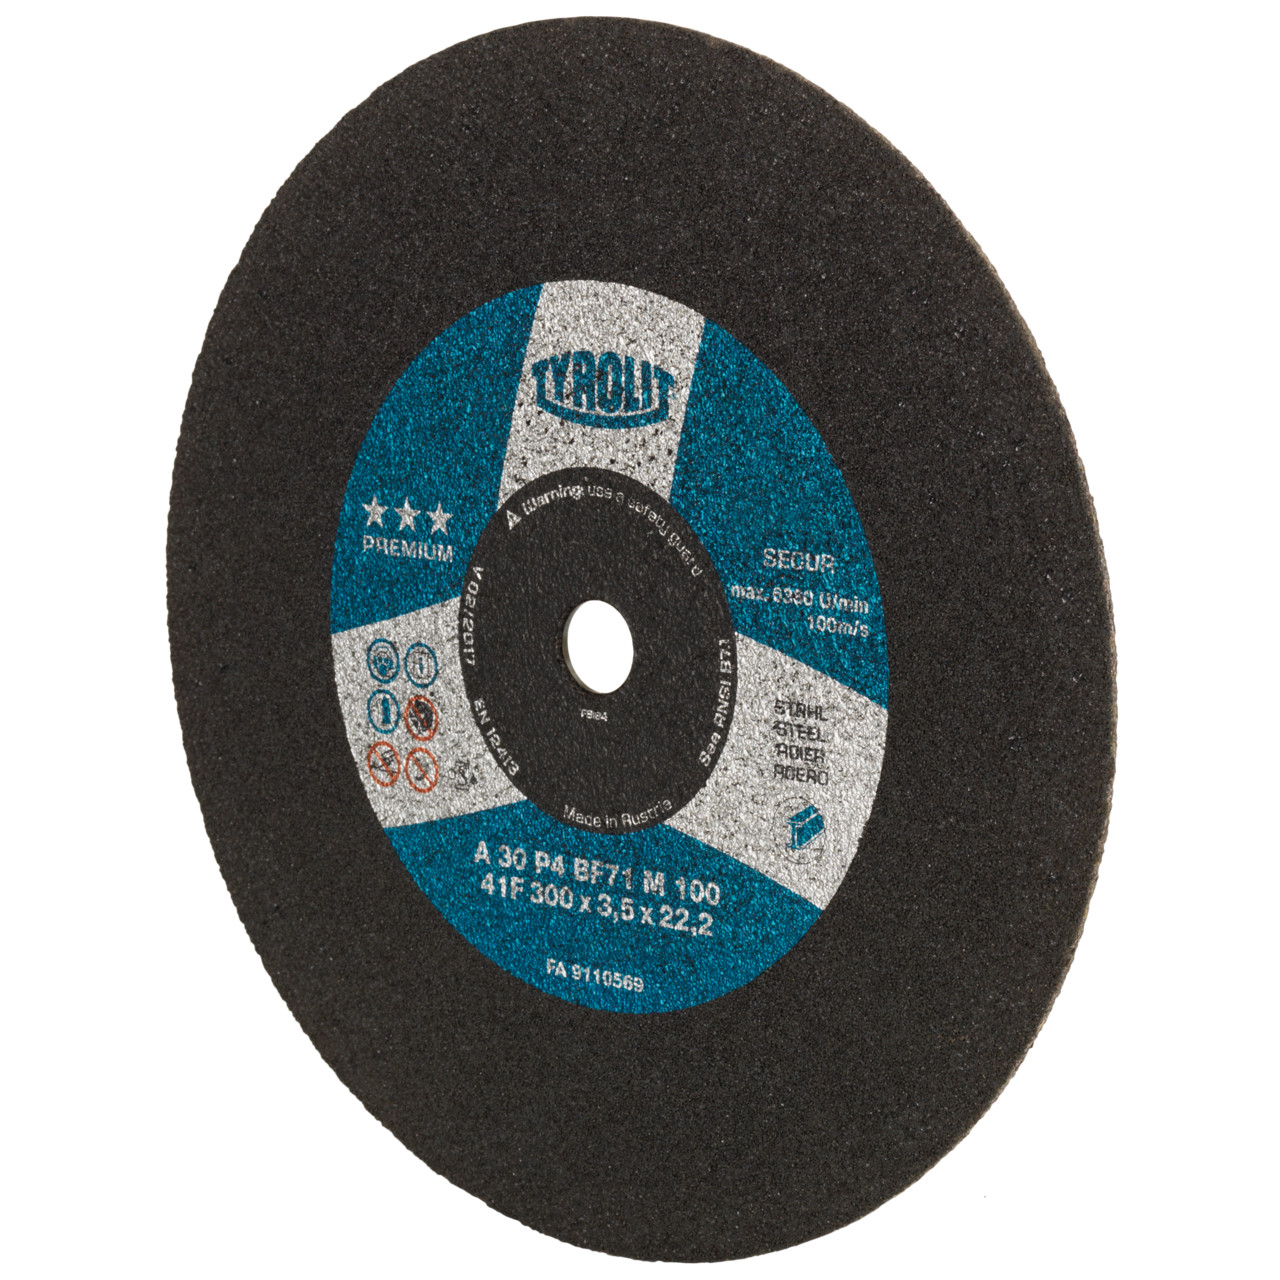 Tyrolit Cutting discs DxDxH 350x3.5x25.4 For steel, shape: 41 - straight version, Art. 408229